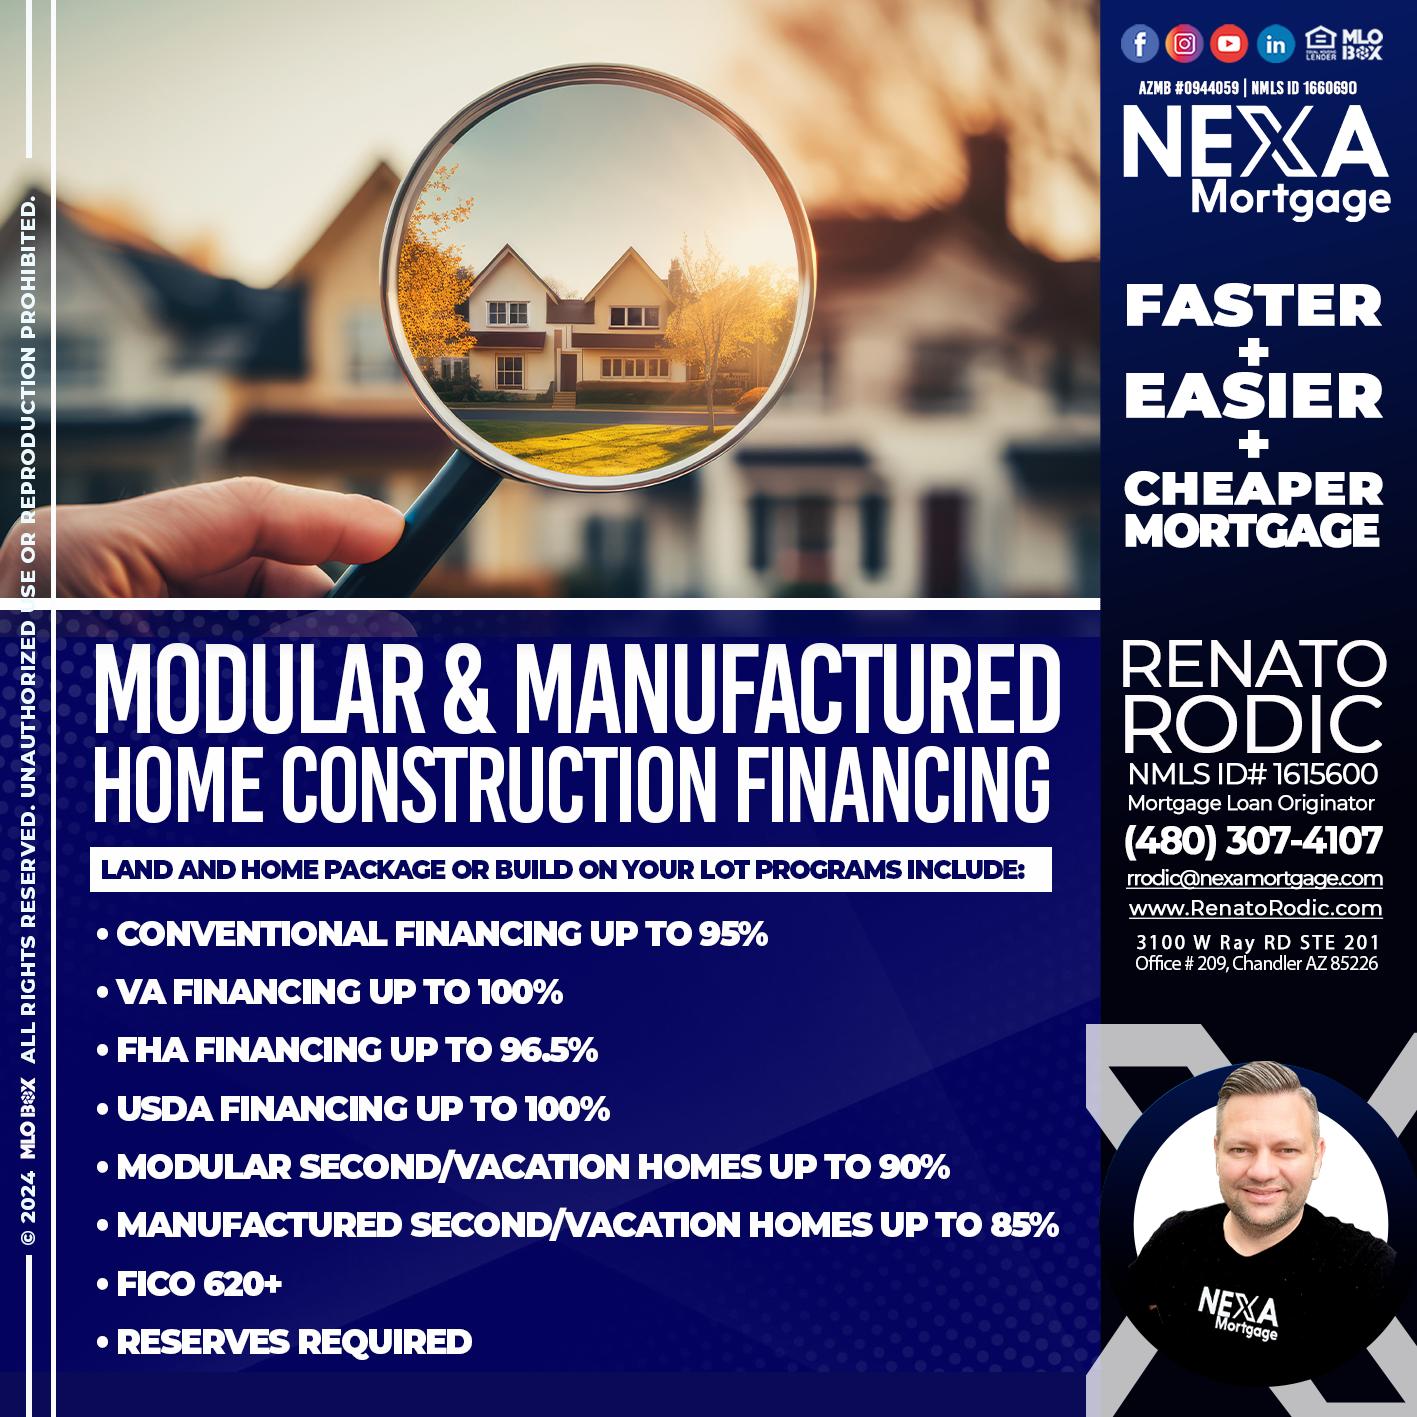 MODULAR - Renato Rodic -Mortgage Loan Originator